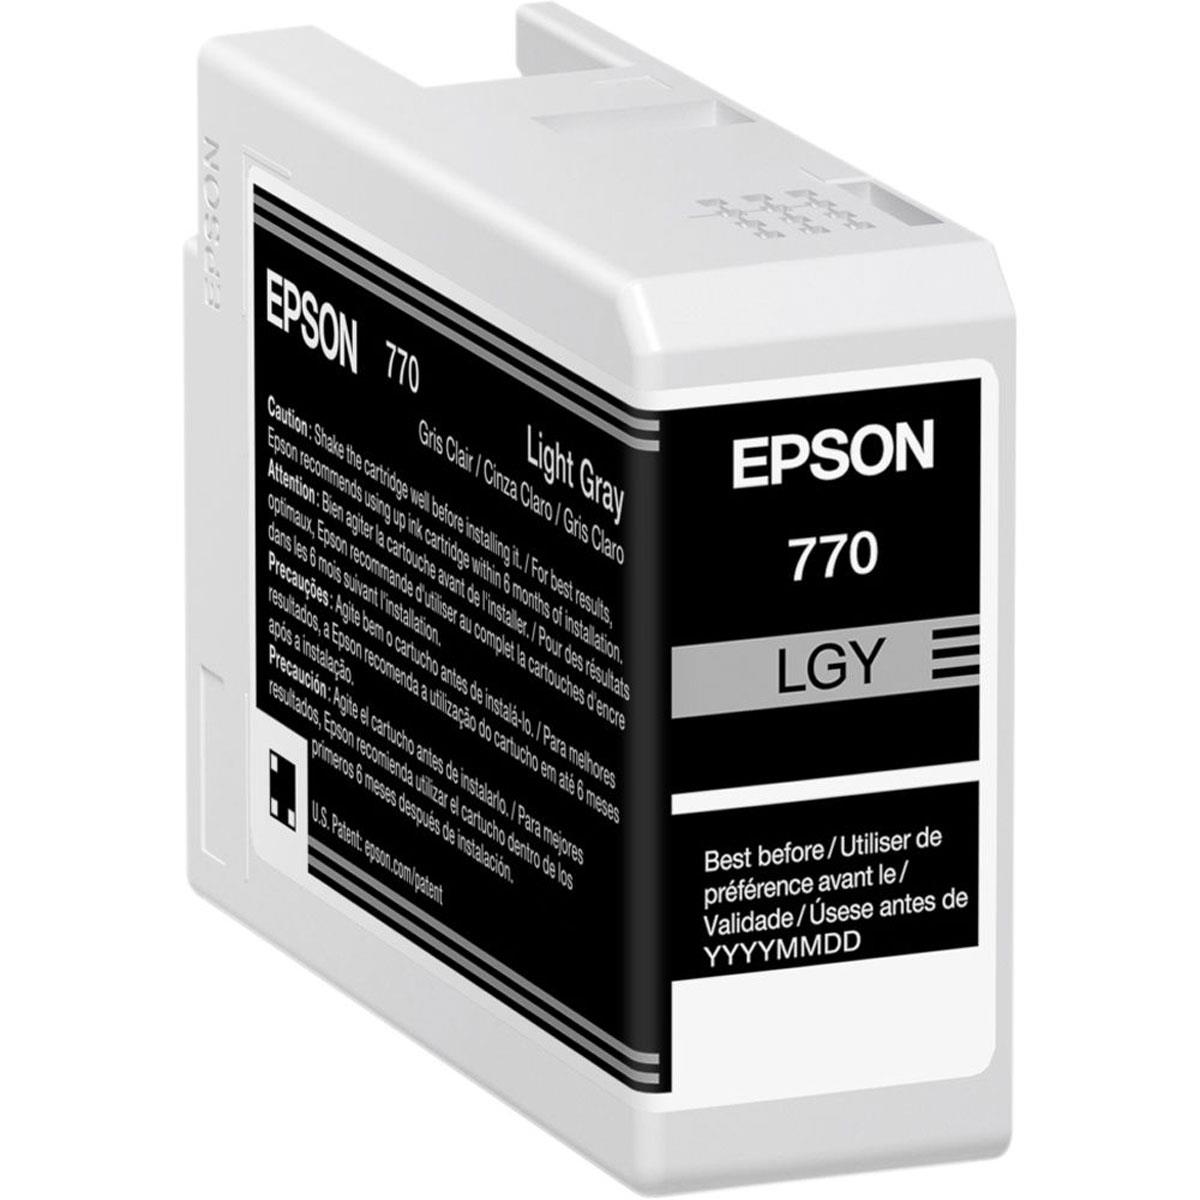 Epson 770 UltraChrome PRO10 Lt Gray Ink